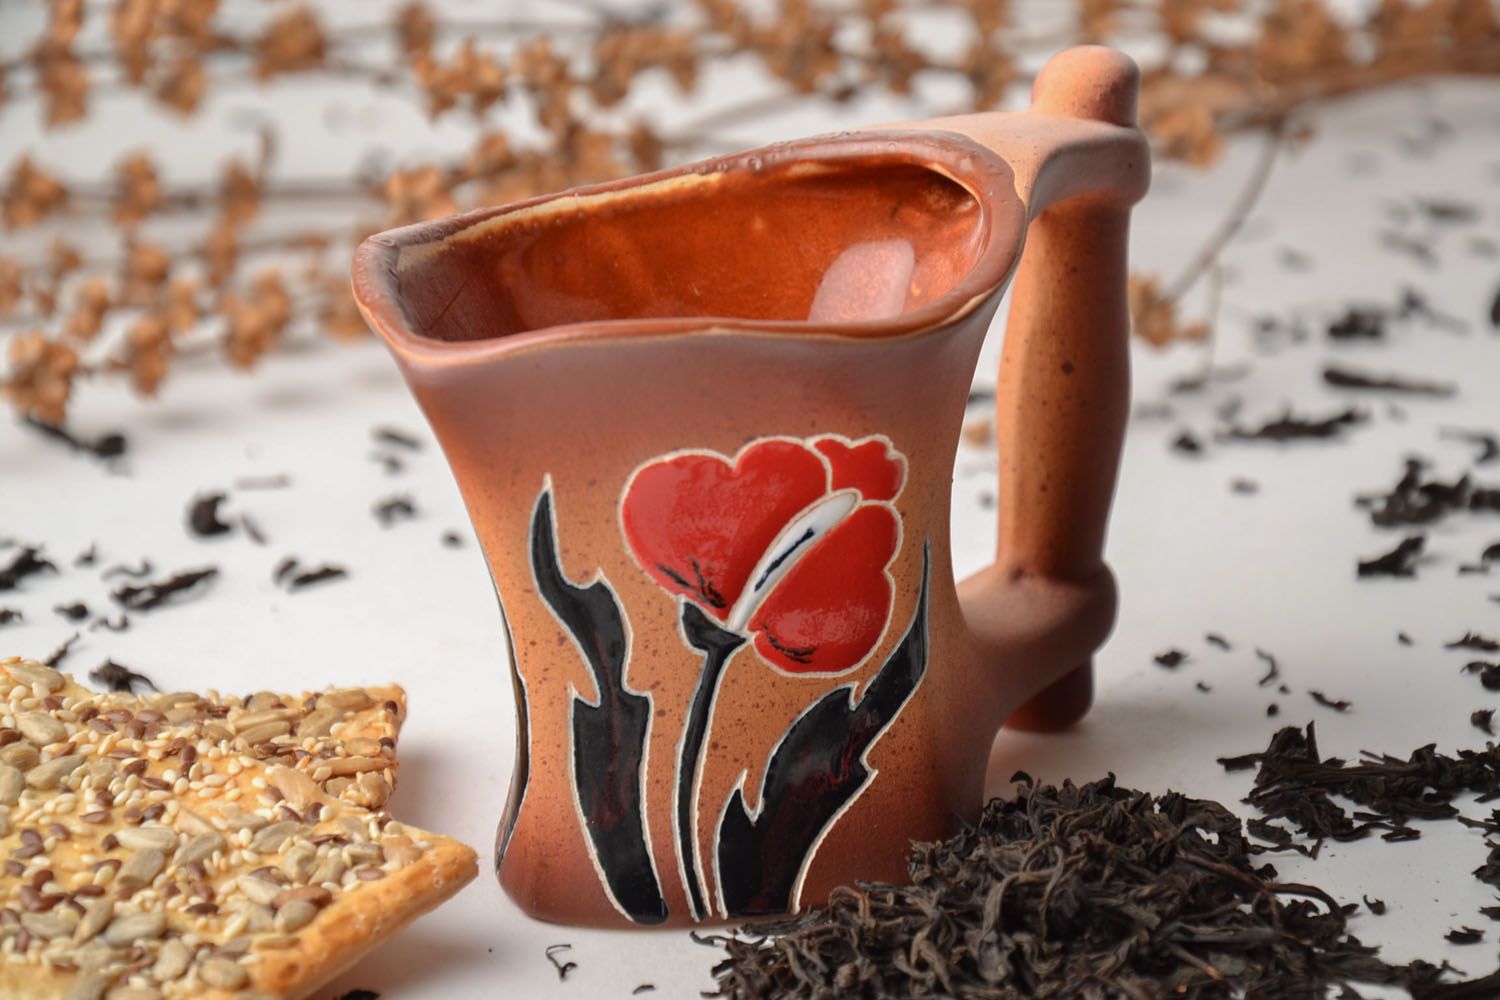 Medium size 8 oz clay glazed decorative ceramic mug with red hot poppies pattern photo 1